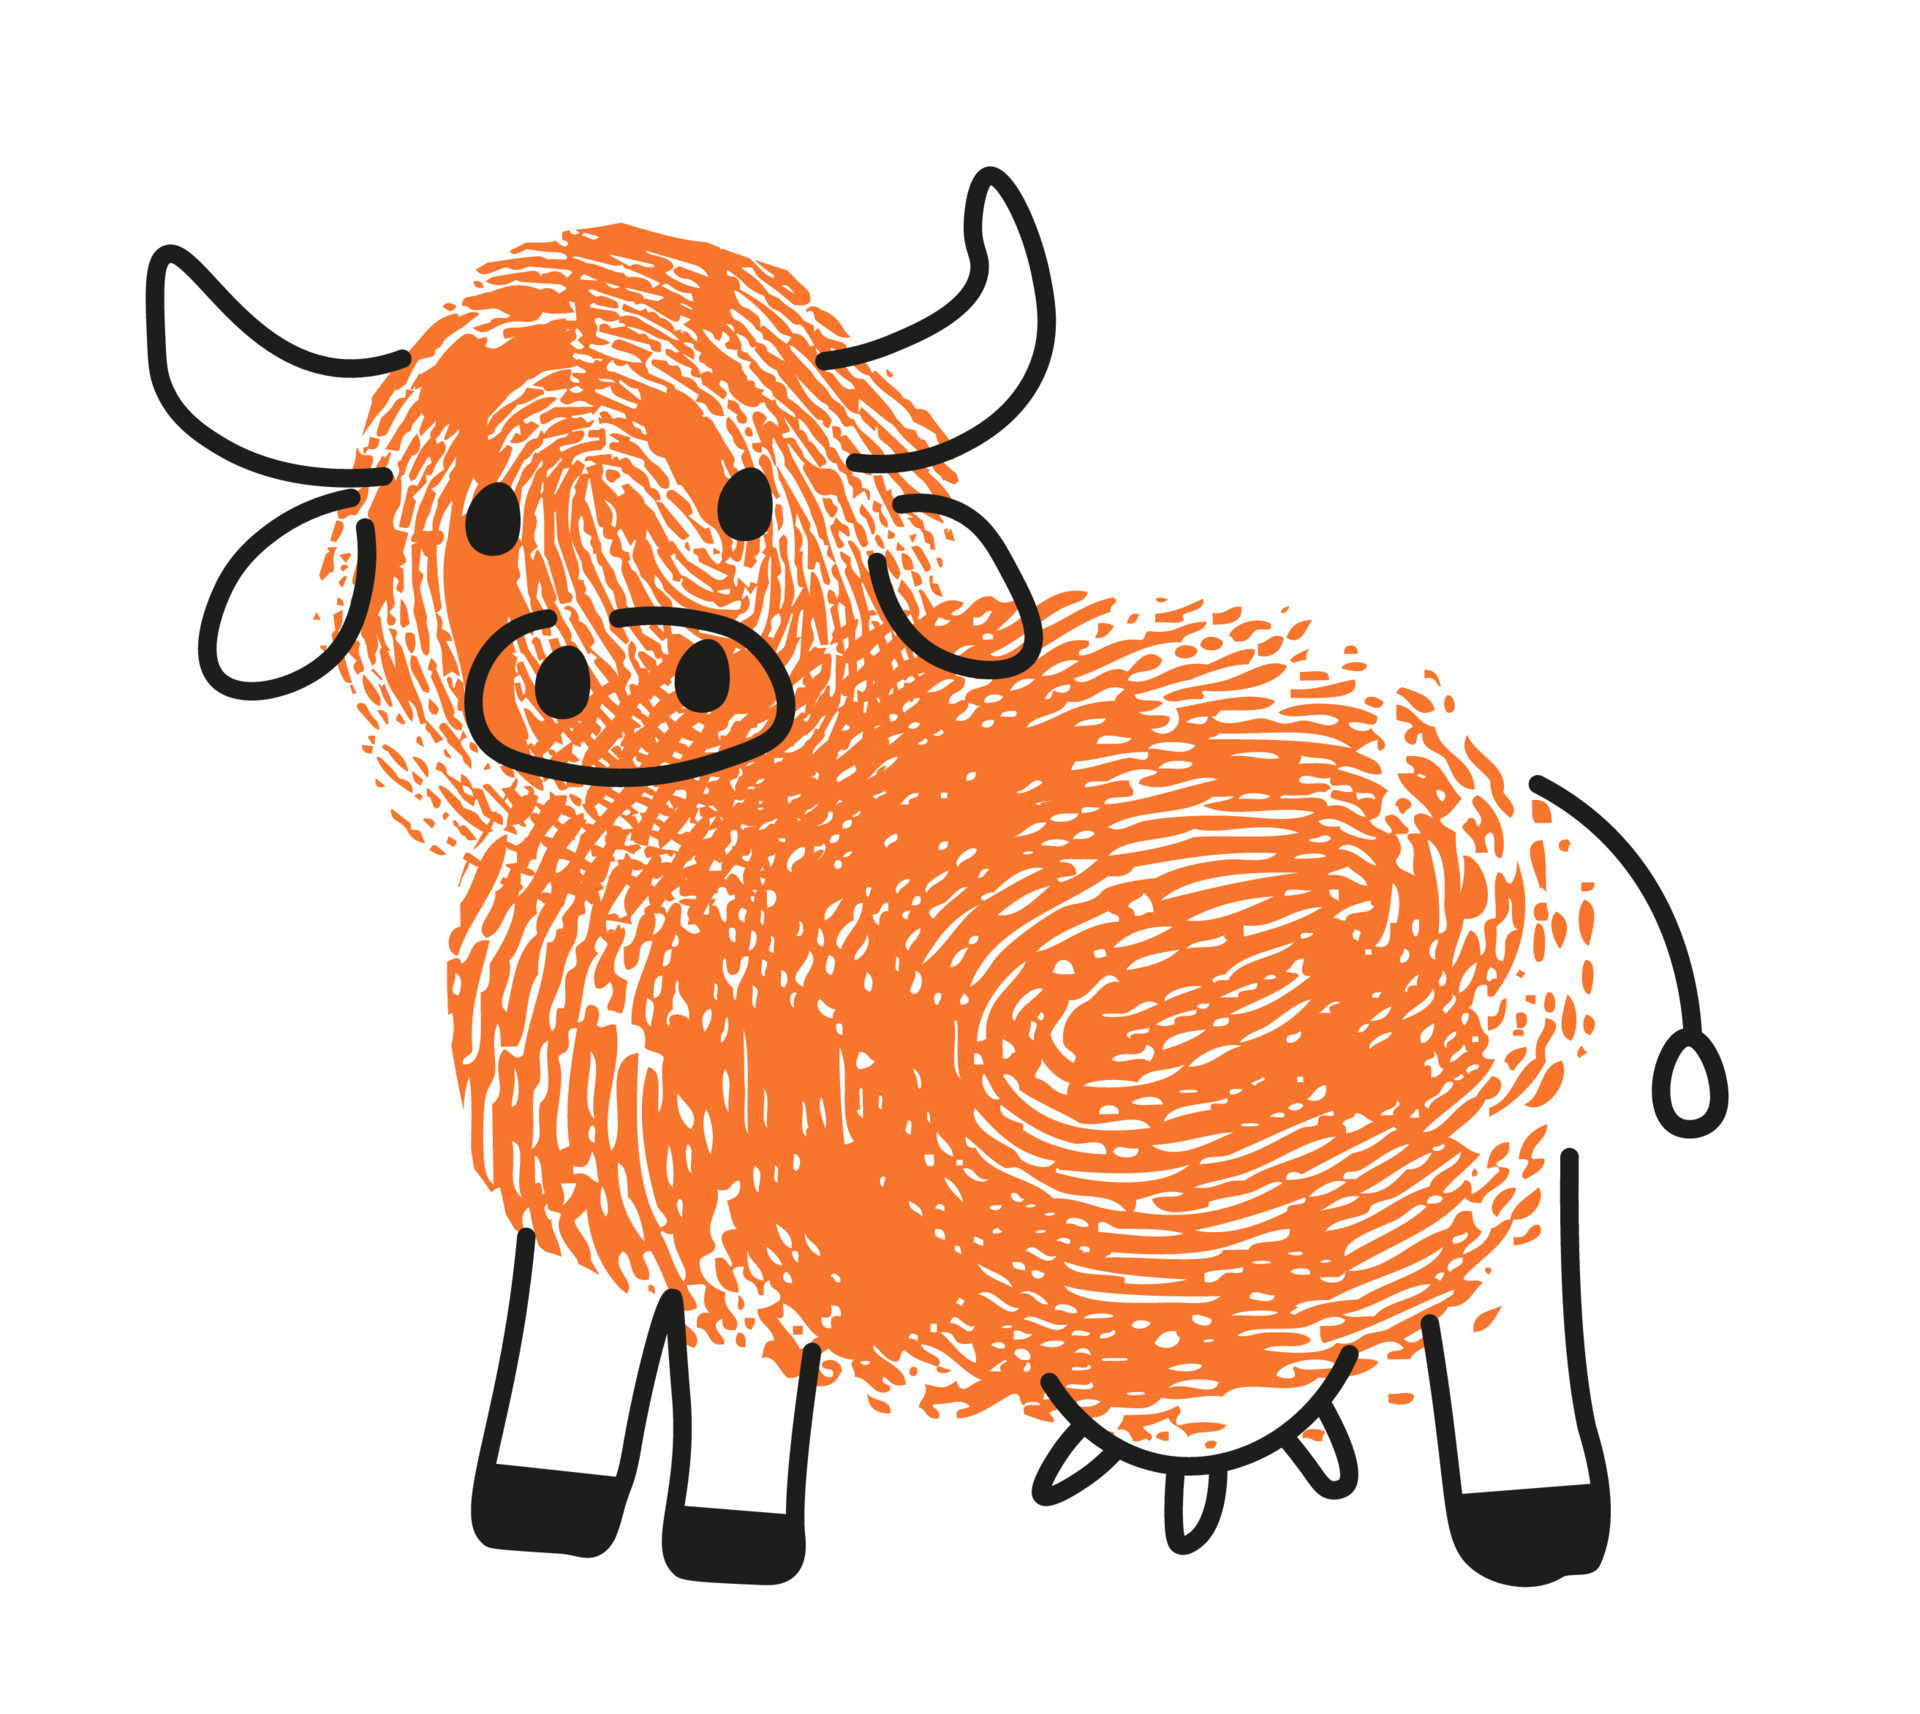 Thumbprint drawing of bull or ox animal vector 17549362 Vector Art at  Vecteezy